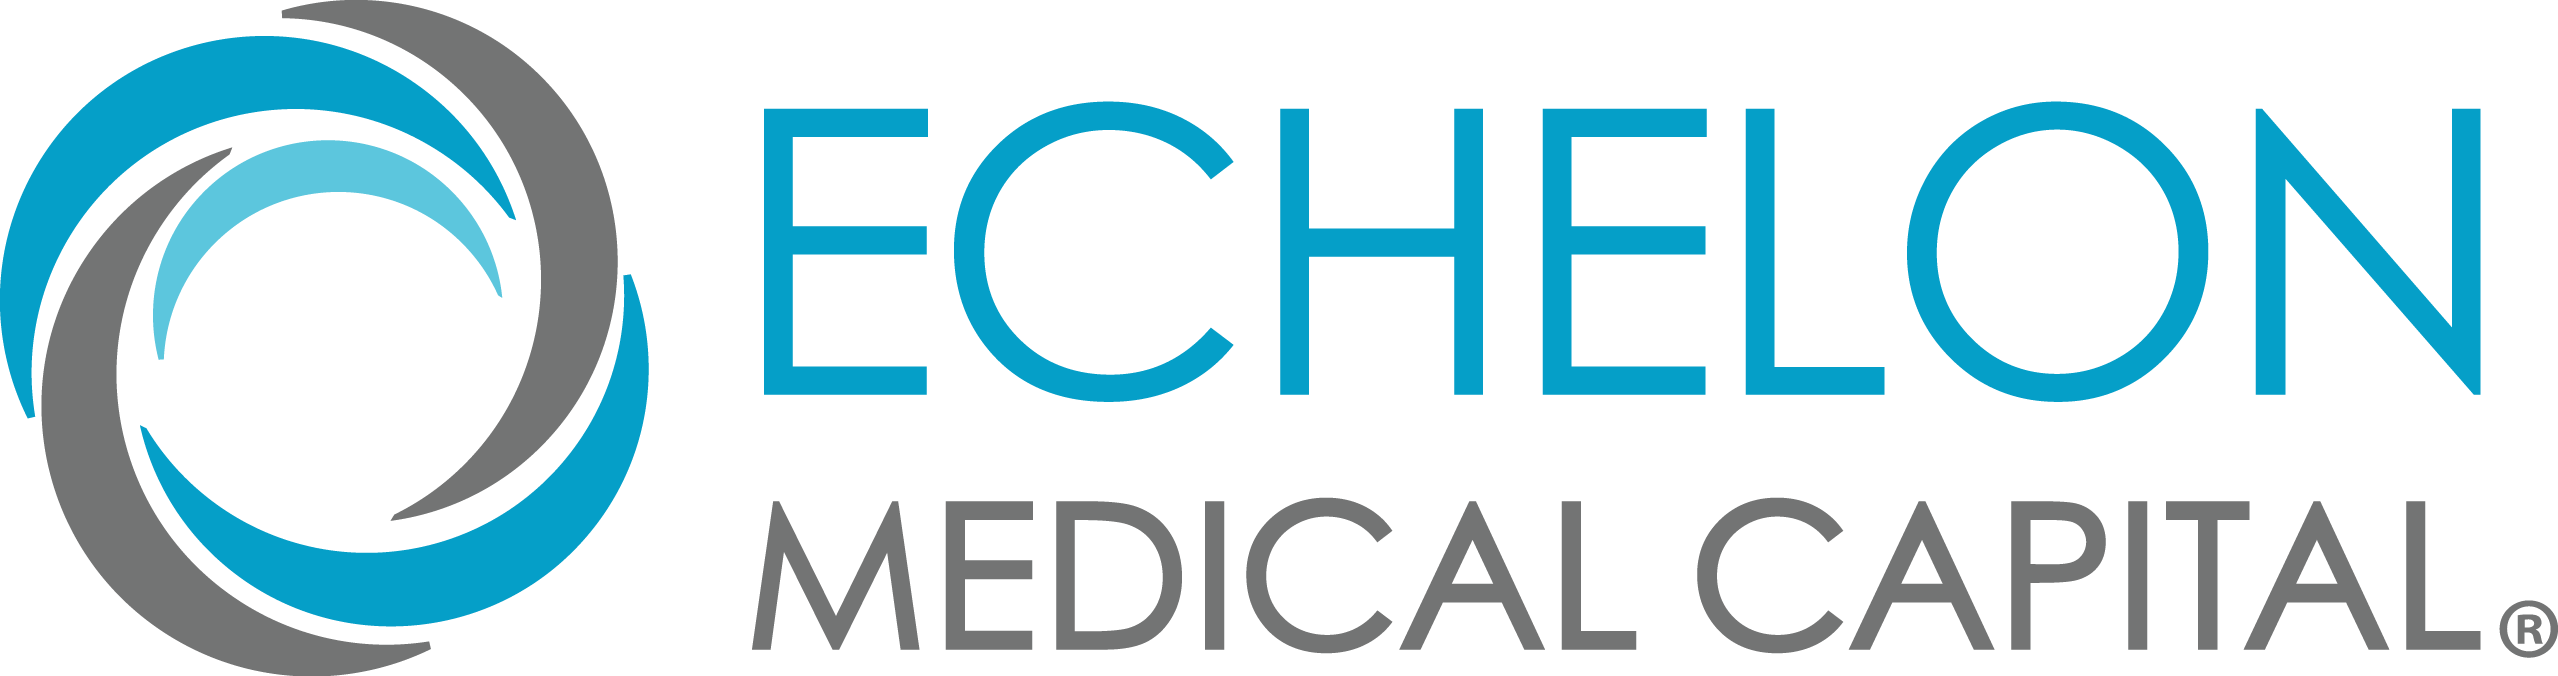 Echelon Medical Capital